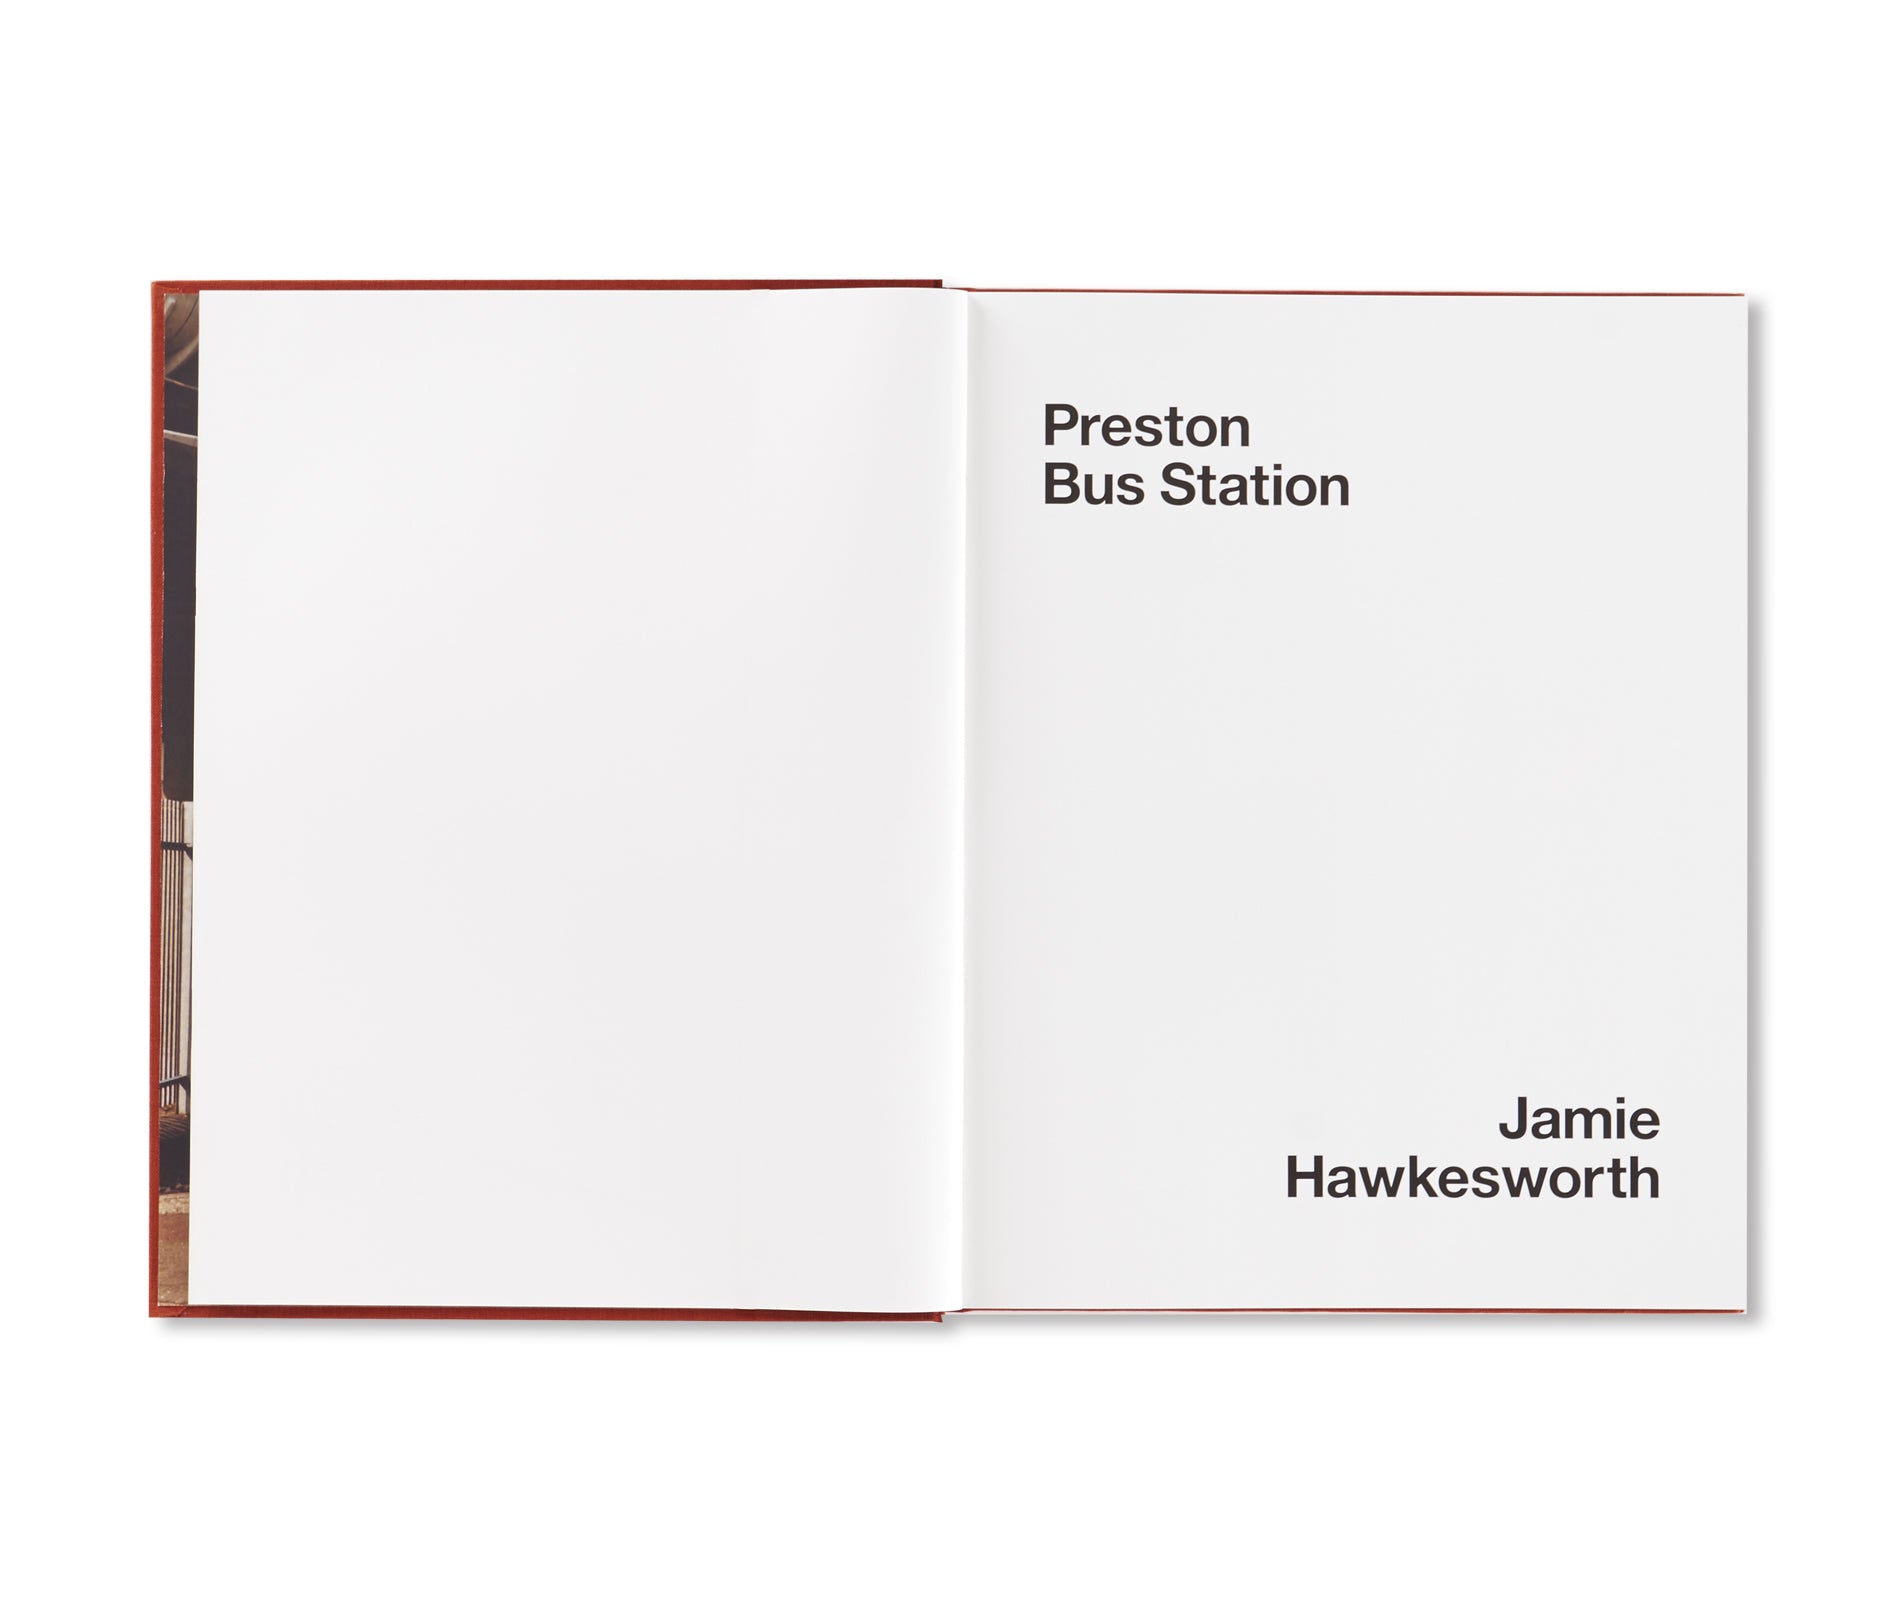 PRESTON BUS STATION by Jamie Hawkesworth